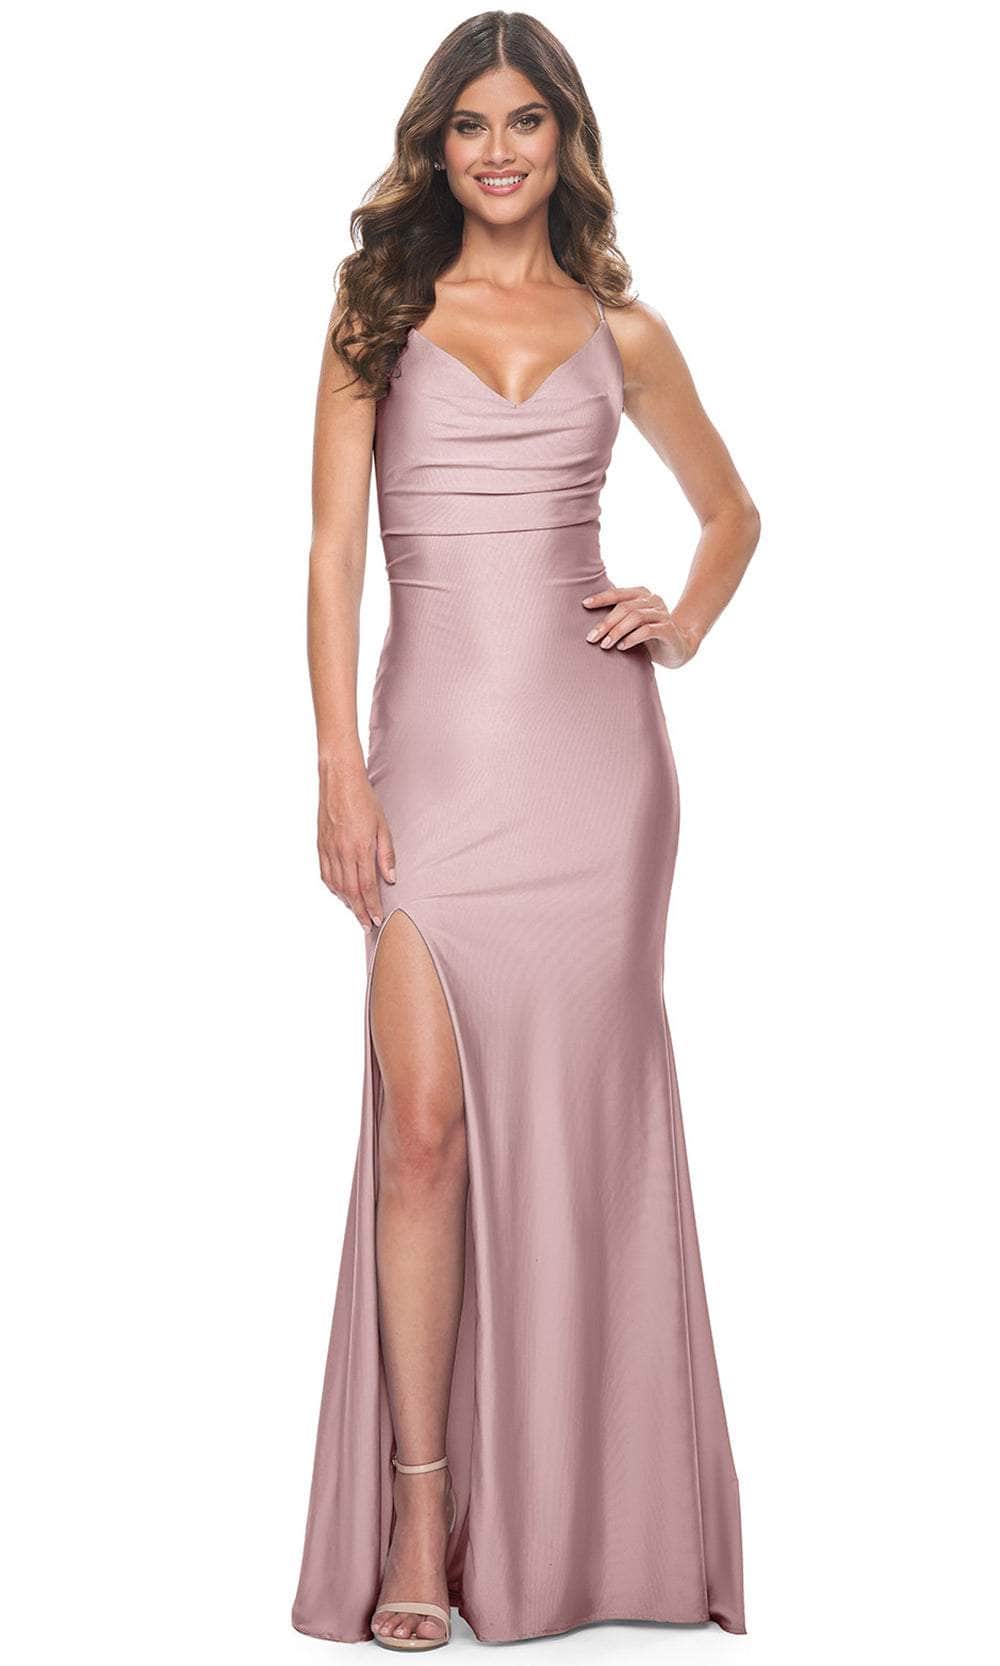 La Femme 31878 - High Slit Jersey Prom Dress Special Occasion Dress 00 / Light Pink